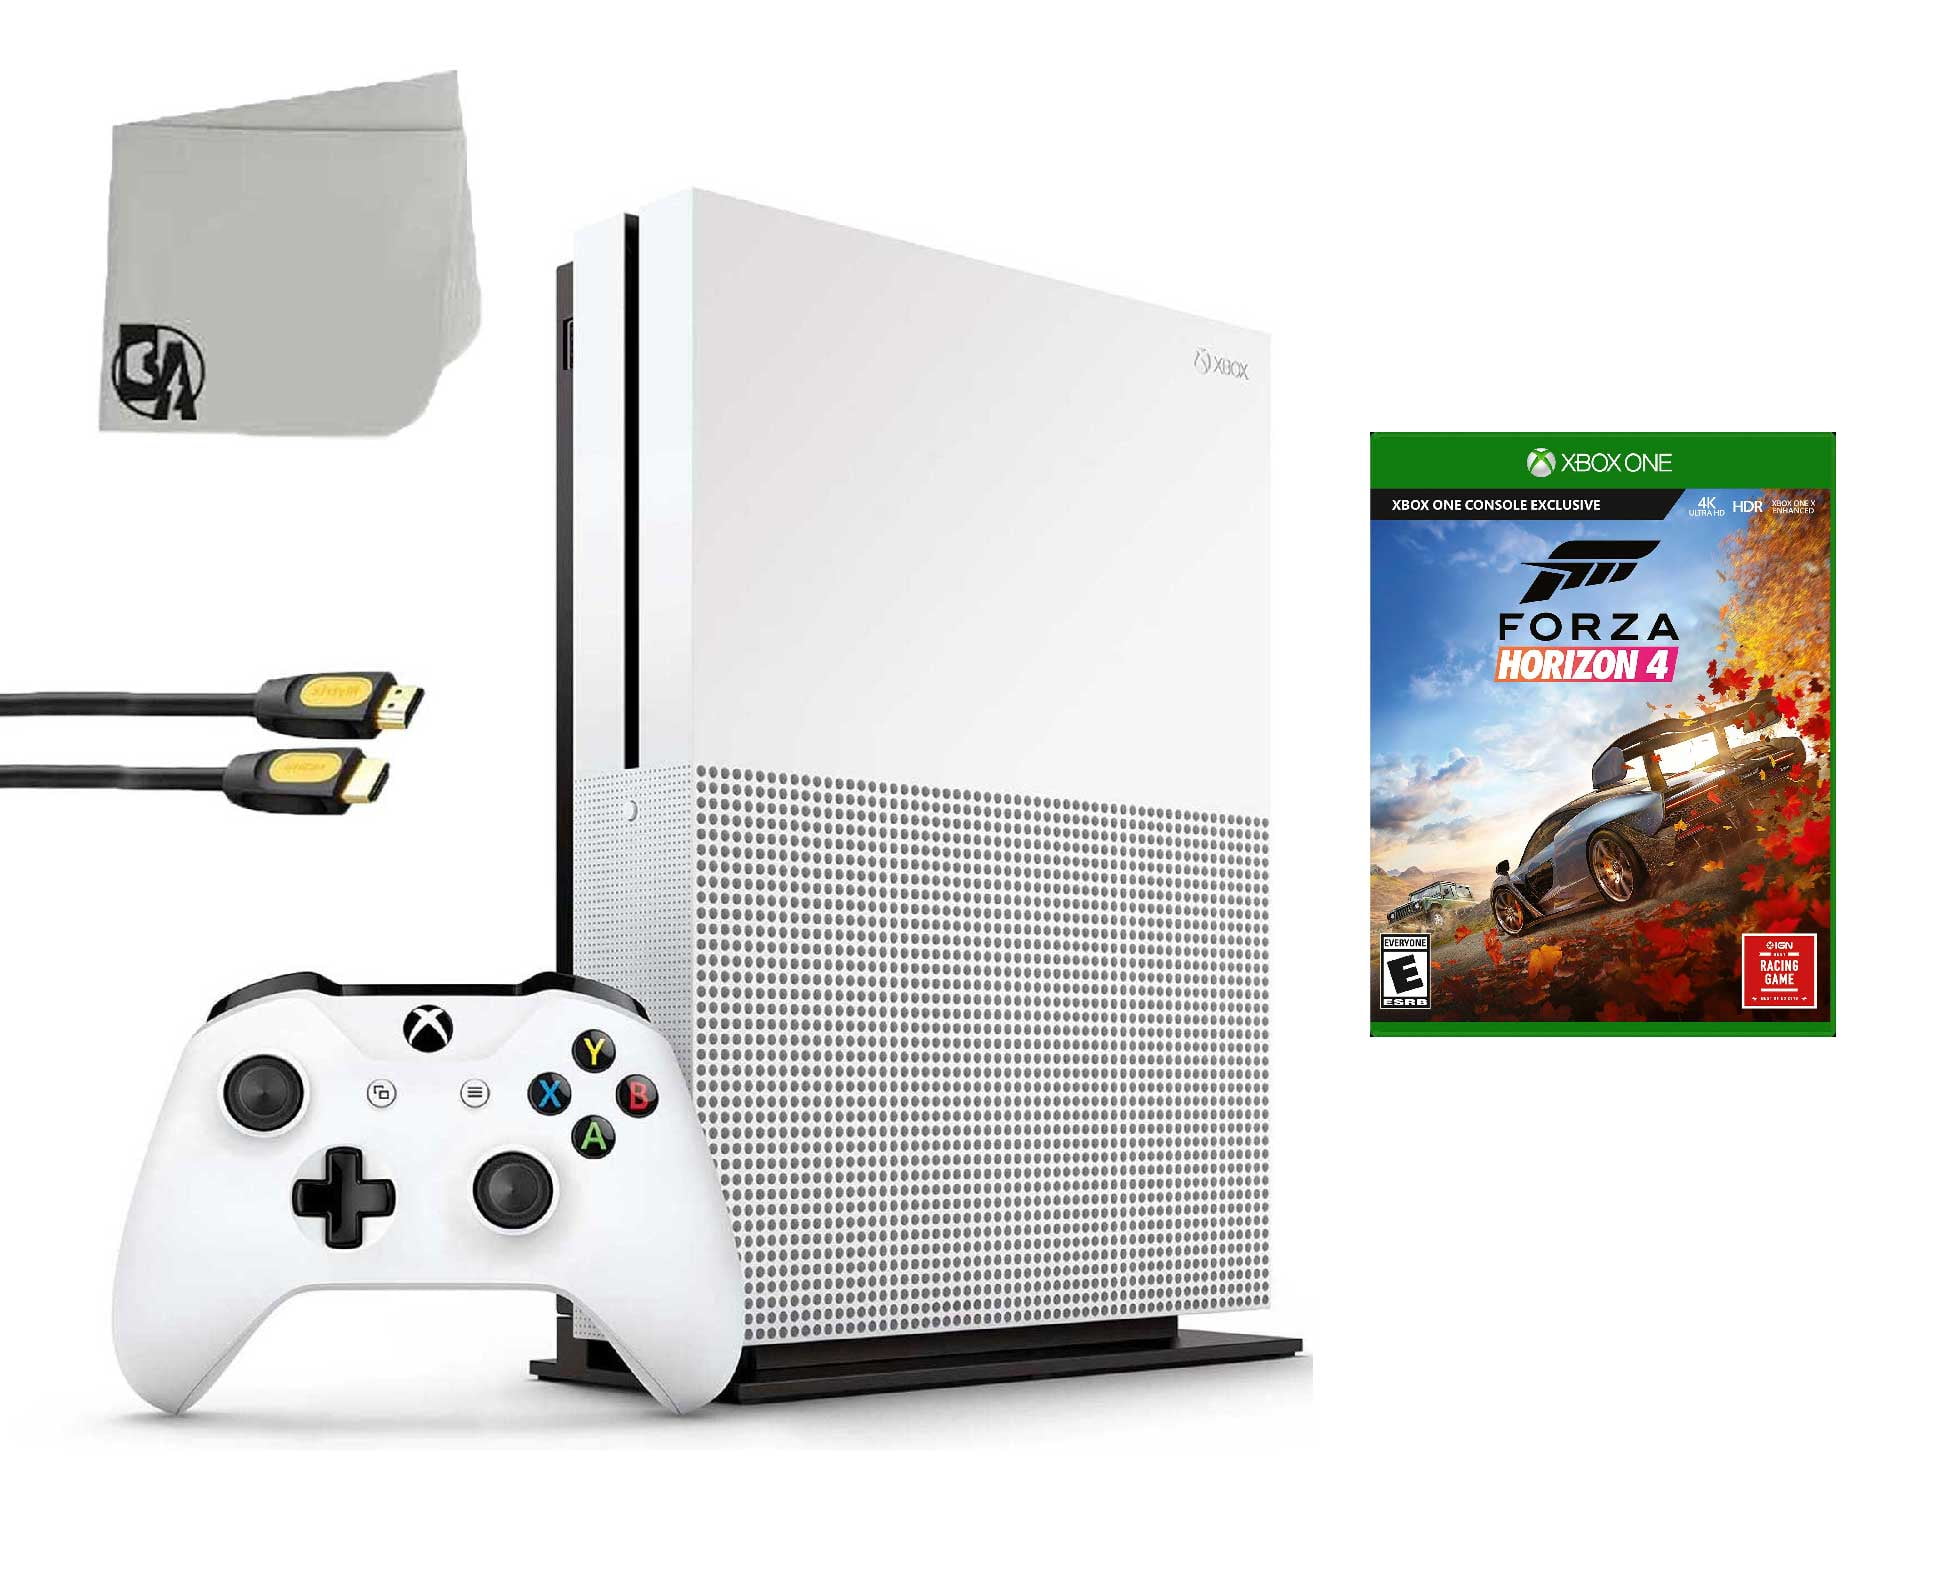 Microsoft Xbox One X 1TB Gaming Console Black with Forza Horizon 4 BOLT  AXTION Bundle Like New